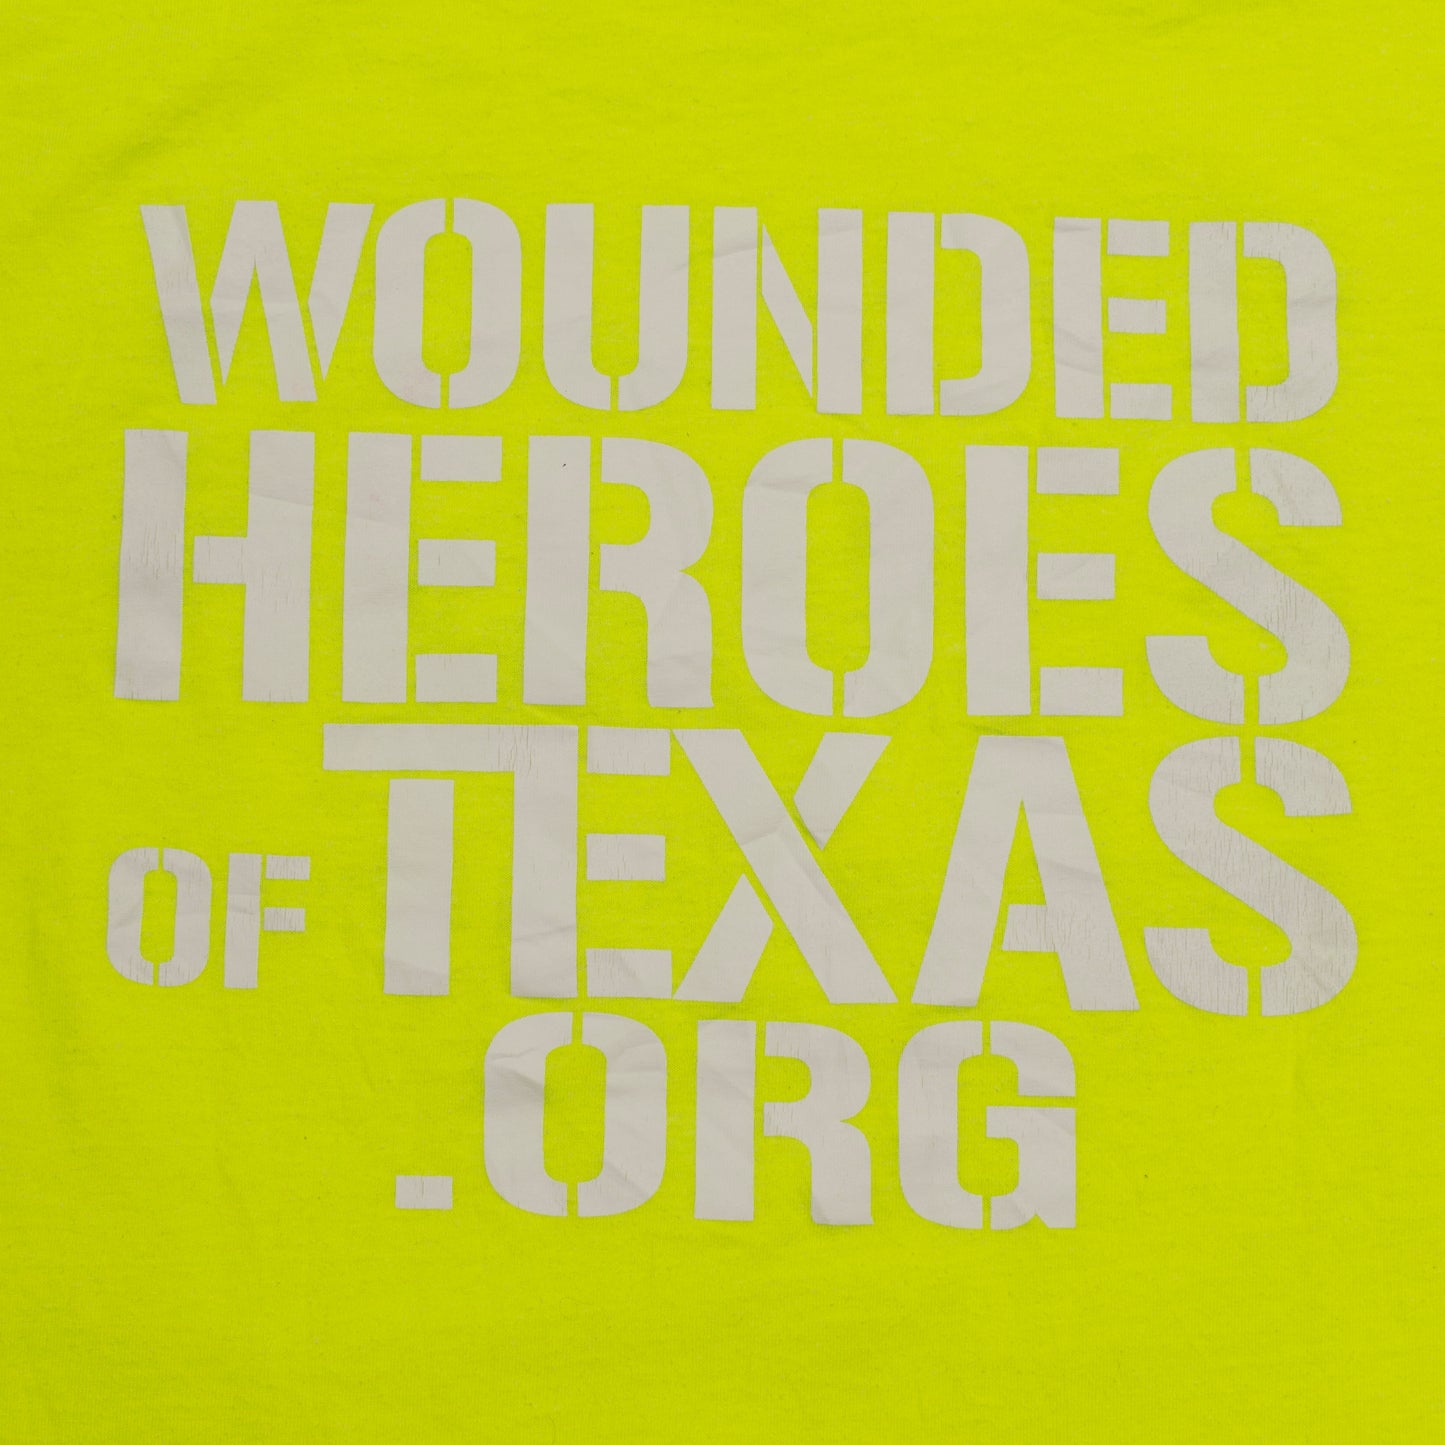 Texas Veterans T Shirt, M